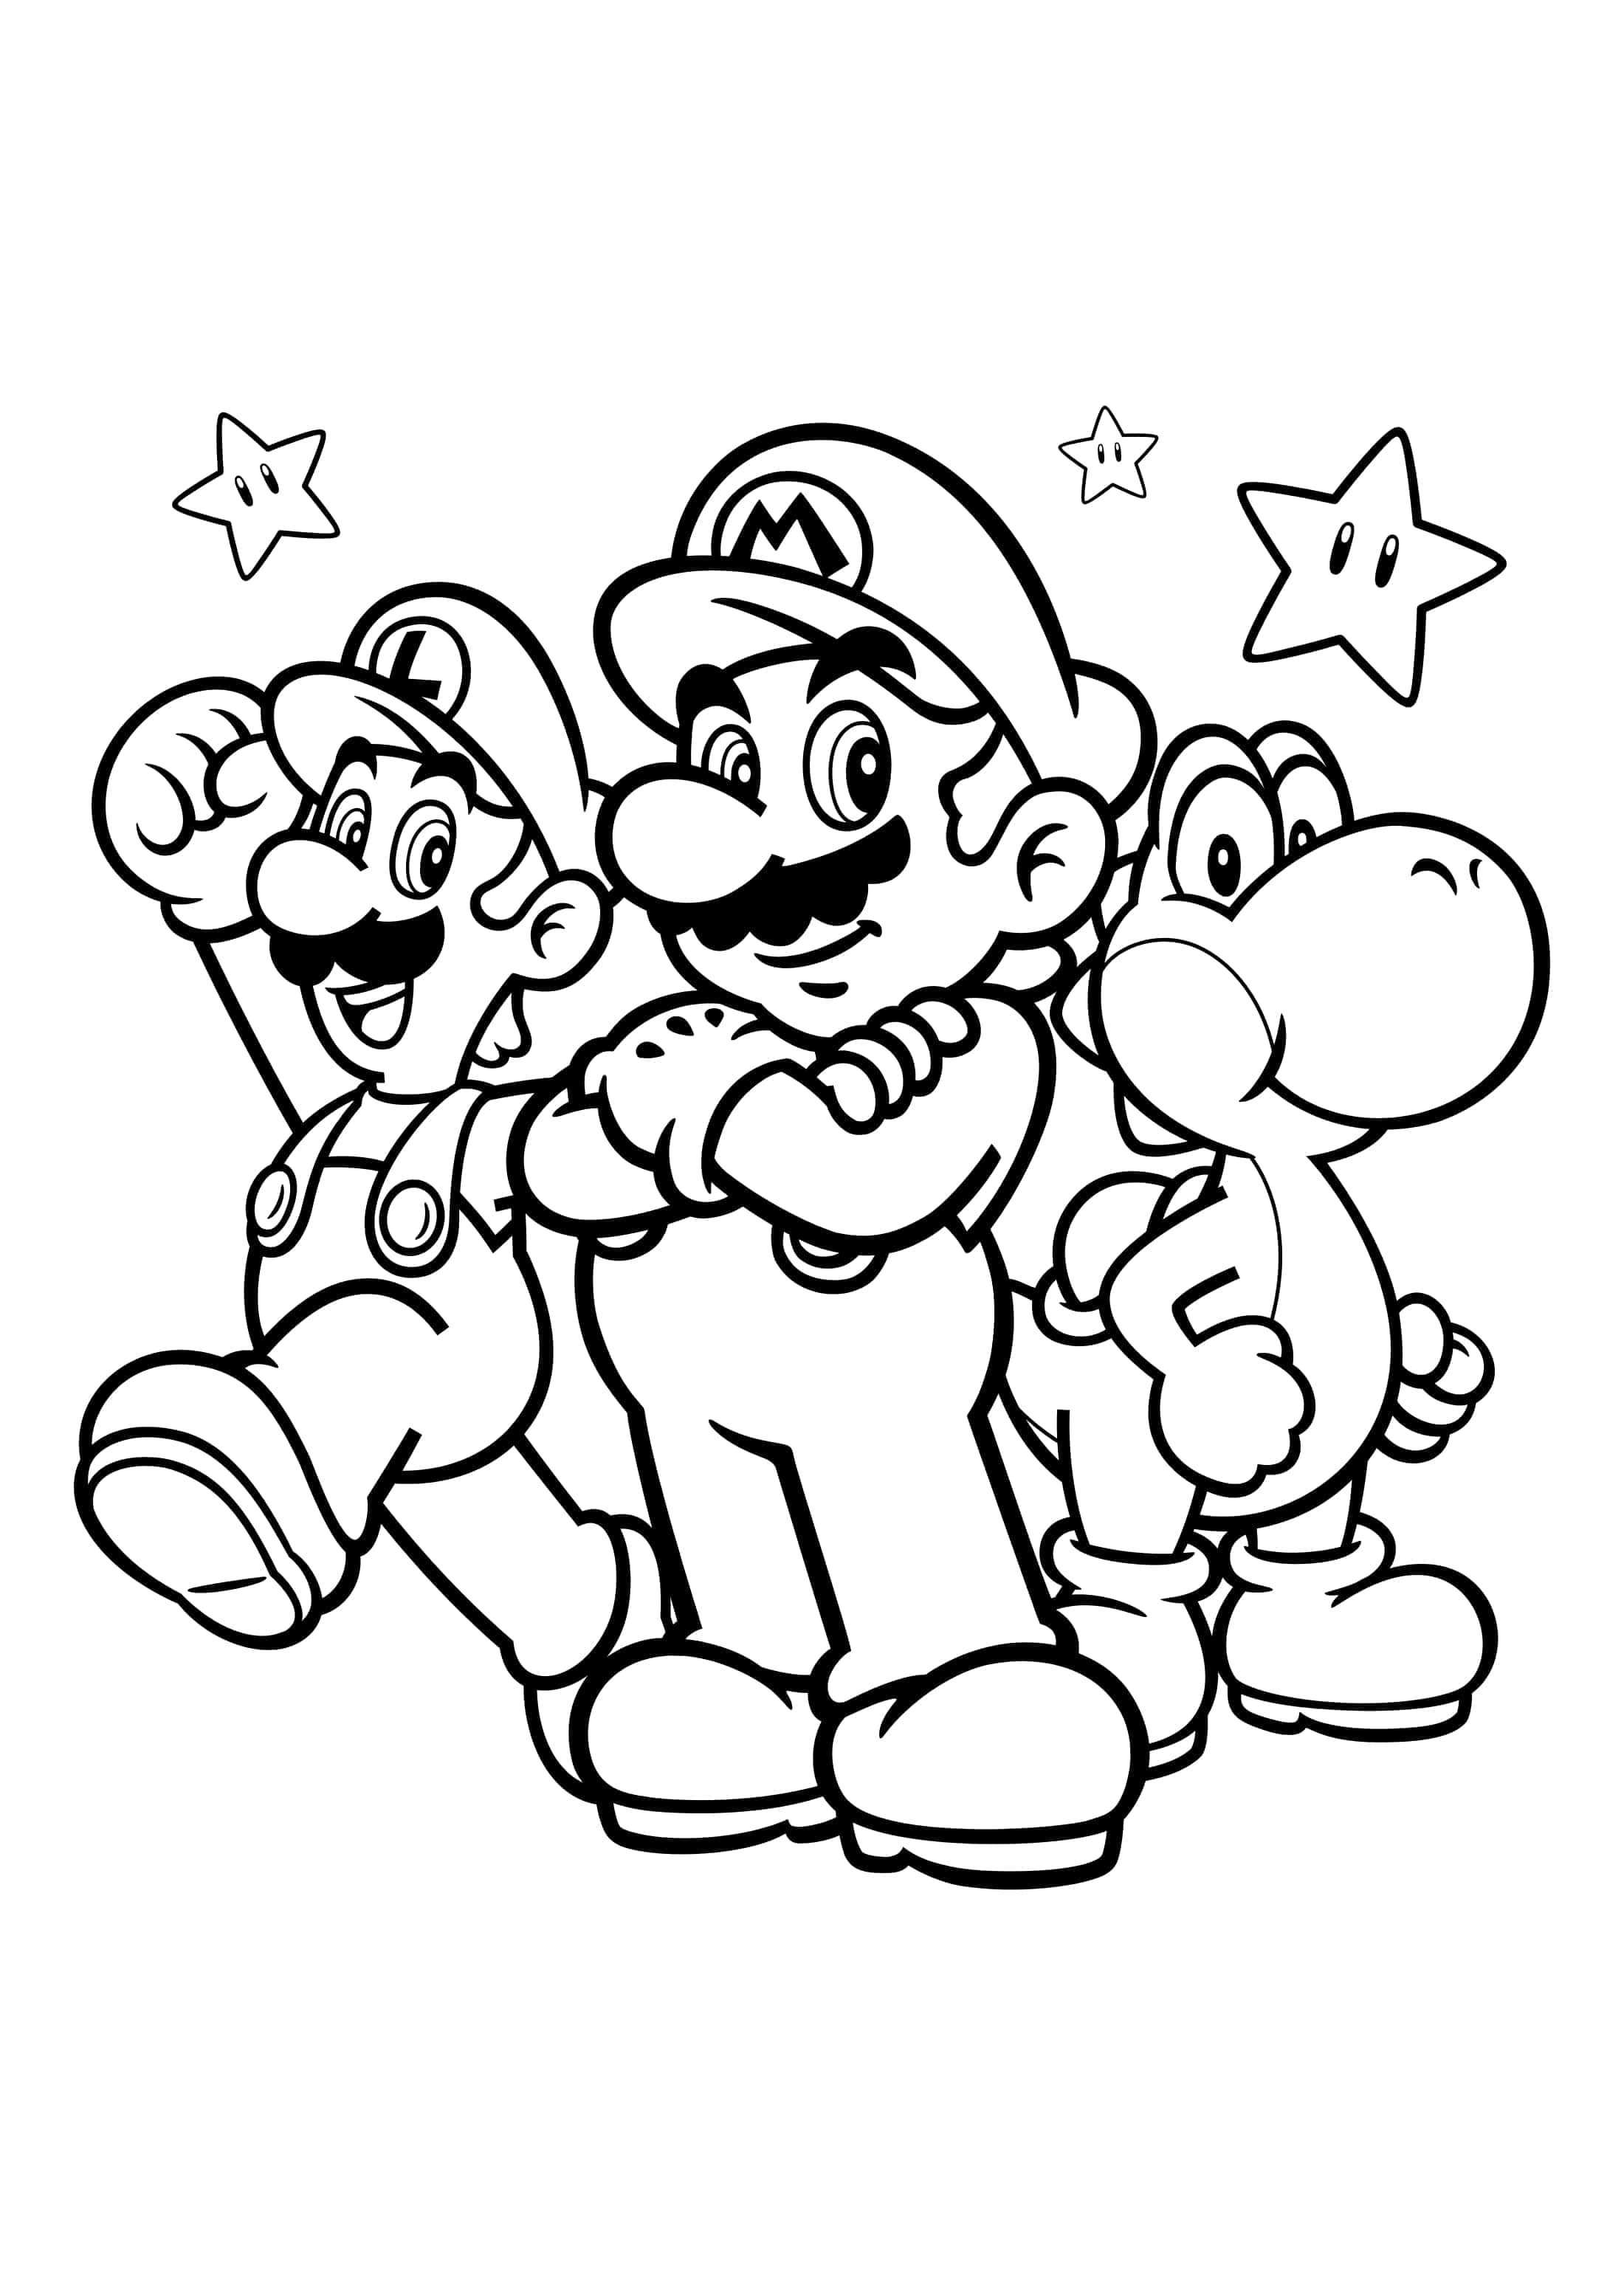 Kolorowanki Super Mario 50 Super Mario do wydrukowania i pokolorowania